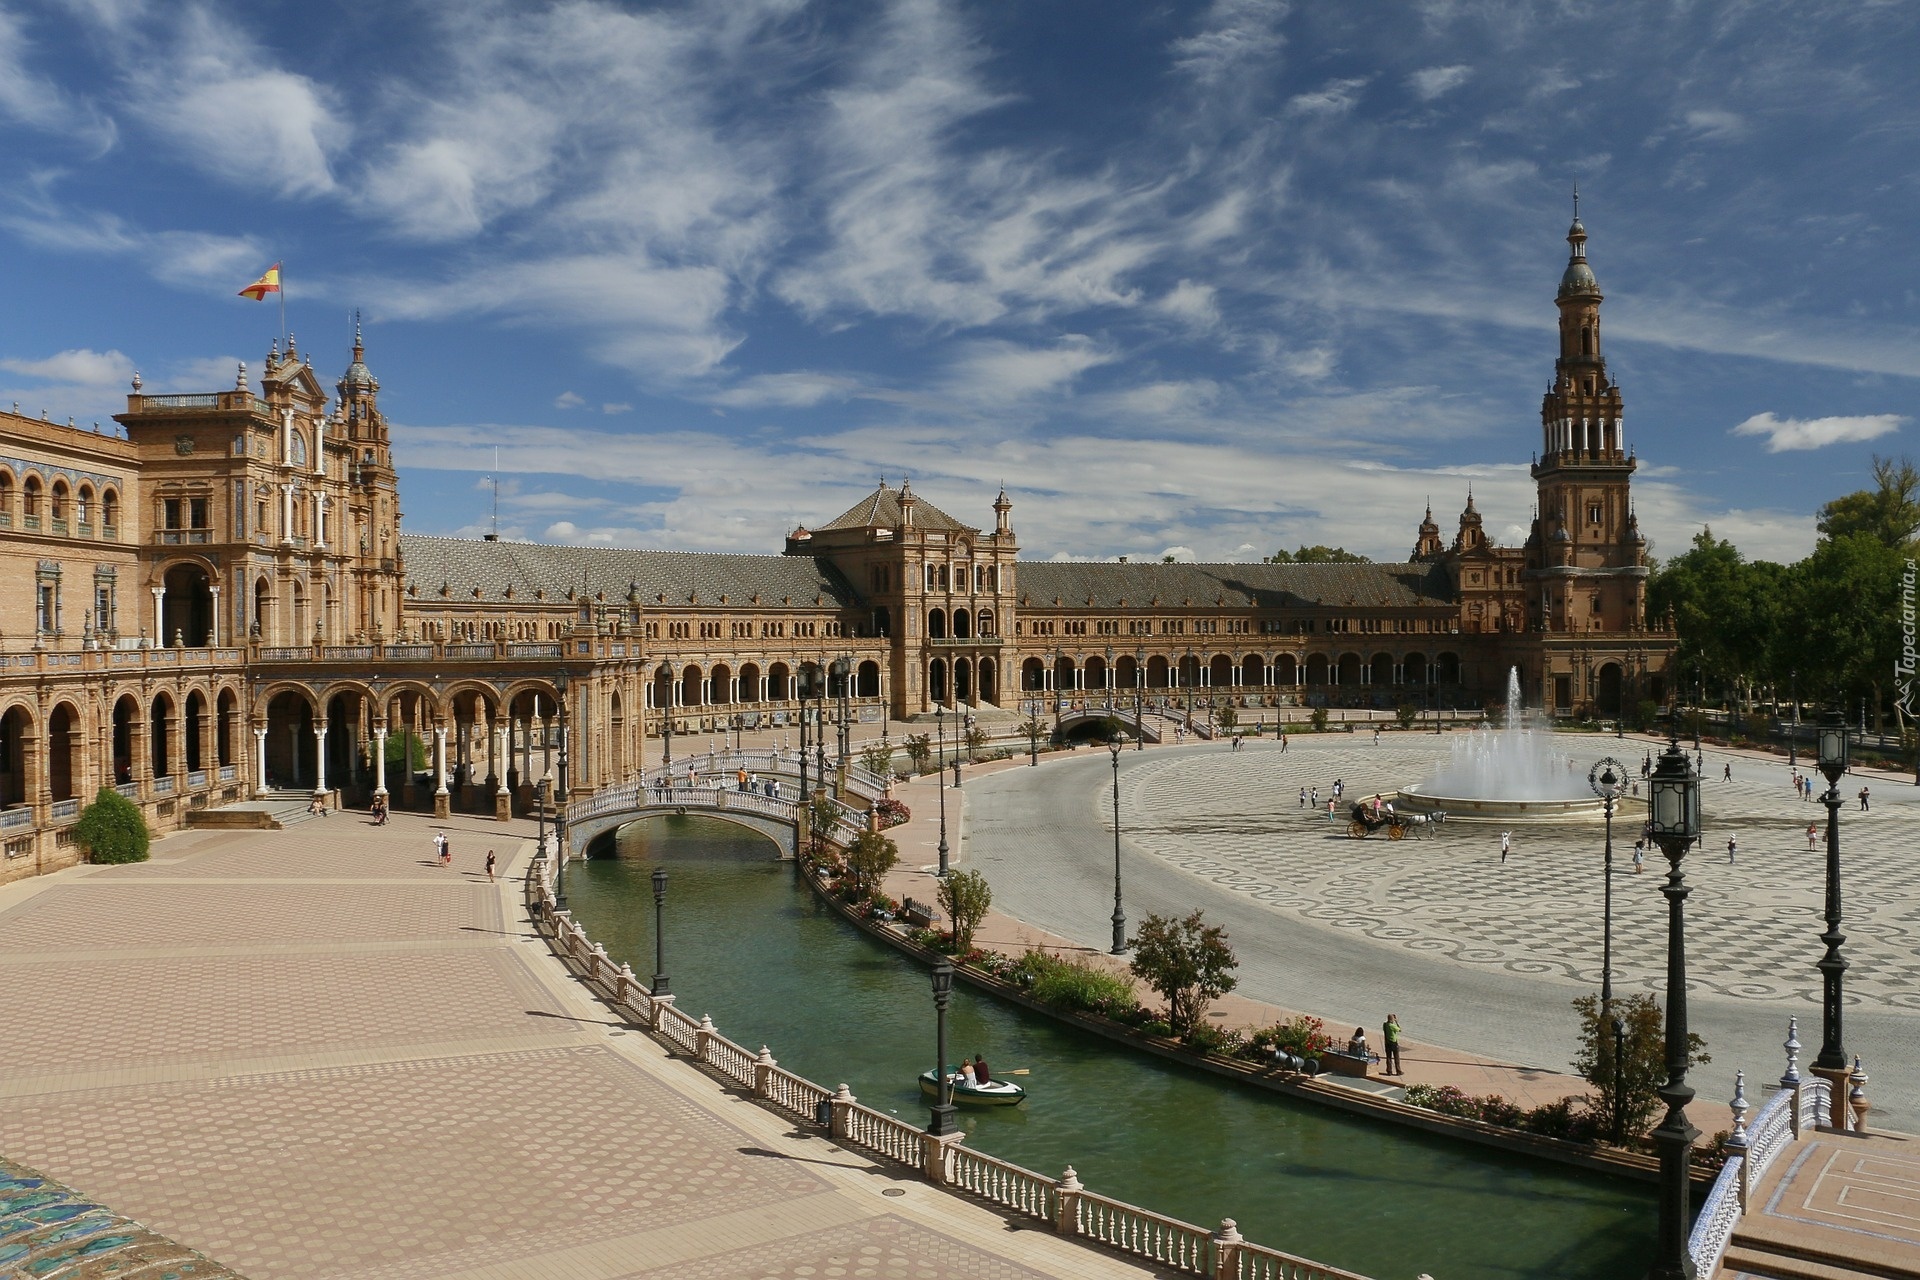 Sevilla, Hiszpania, Plac, Zdjęcie miasta